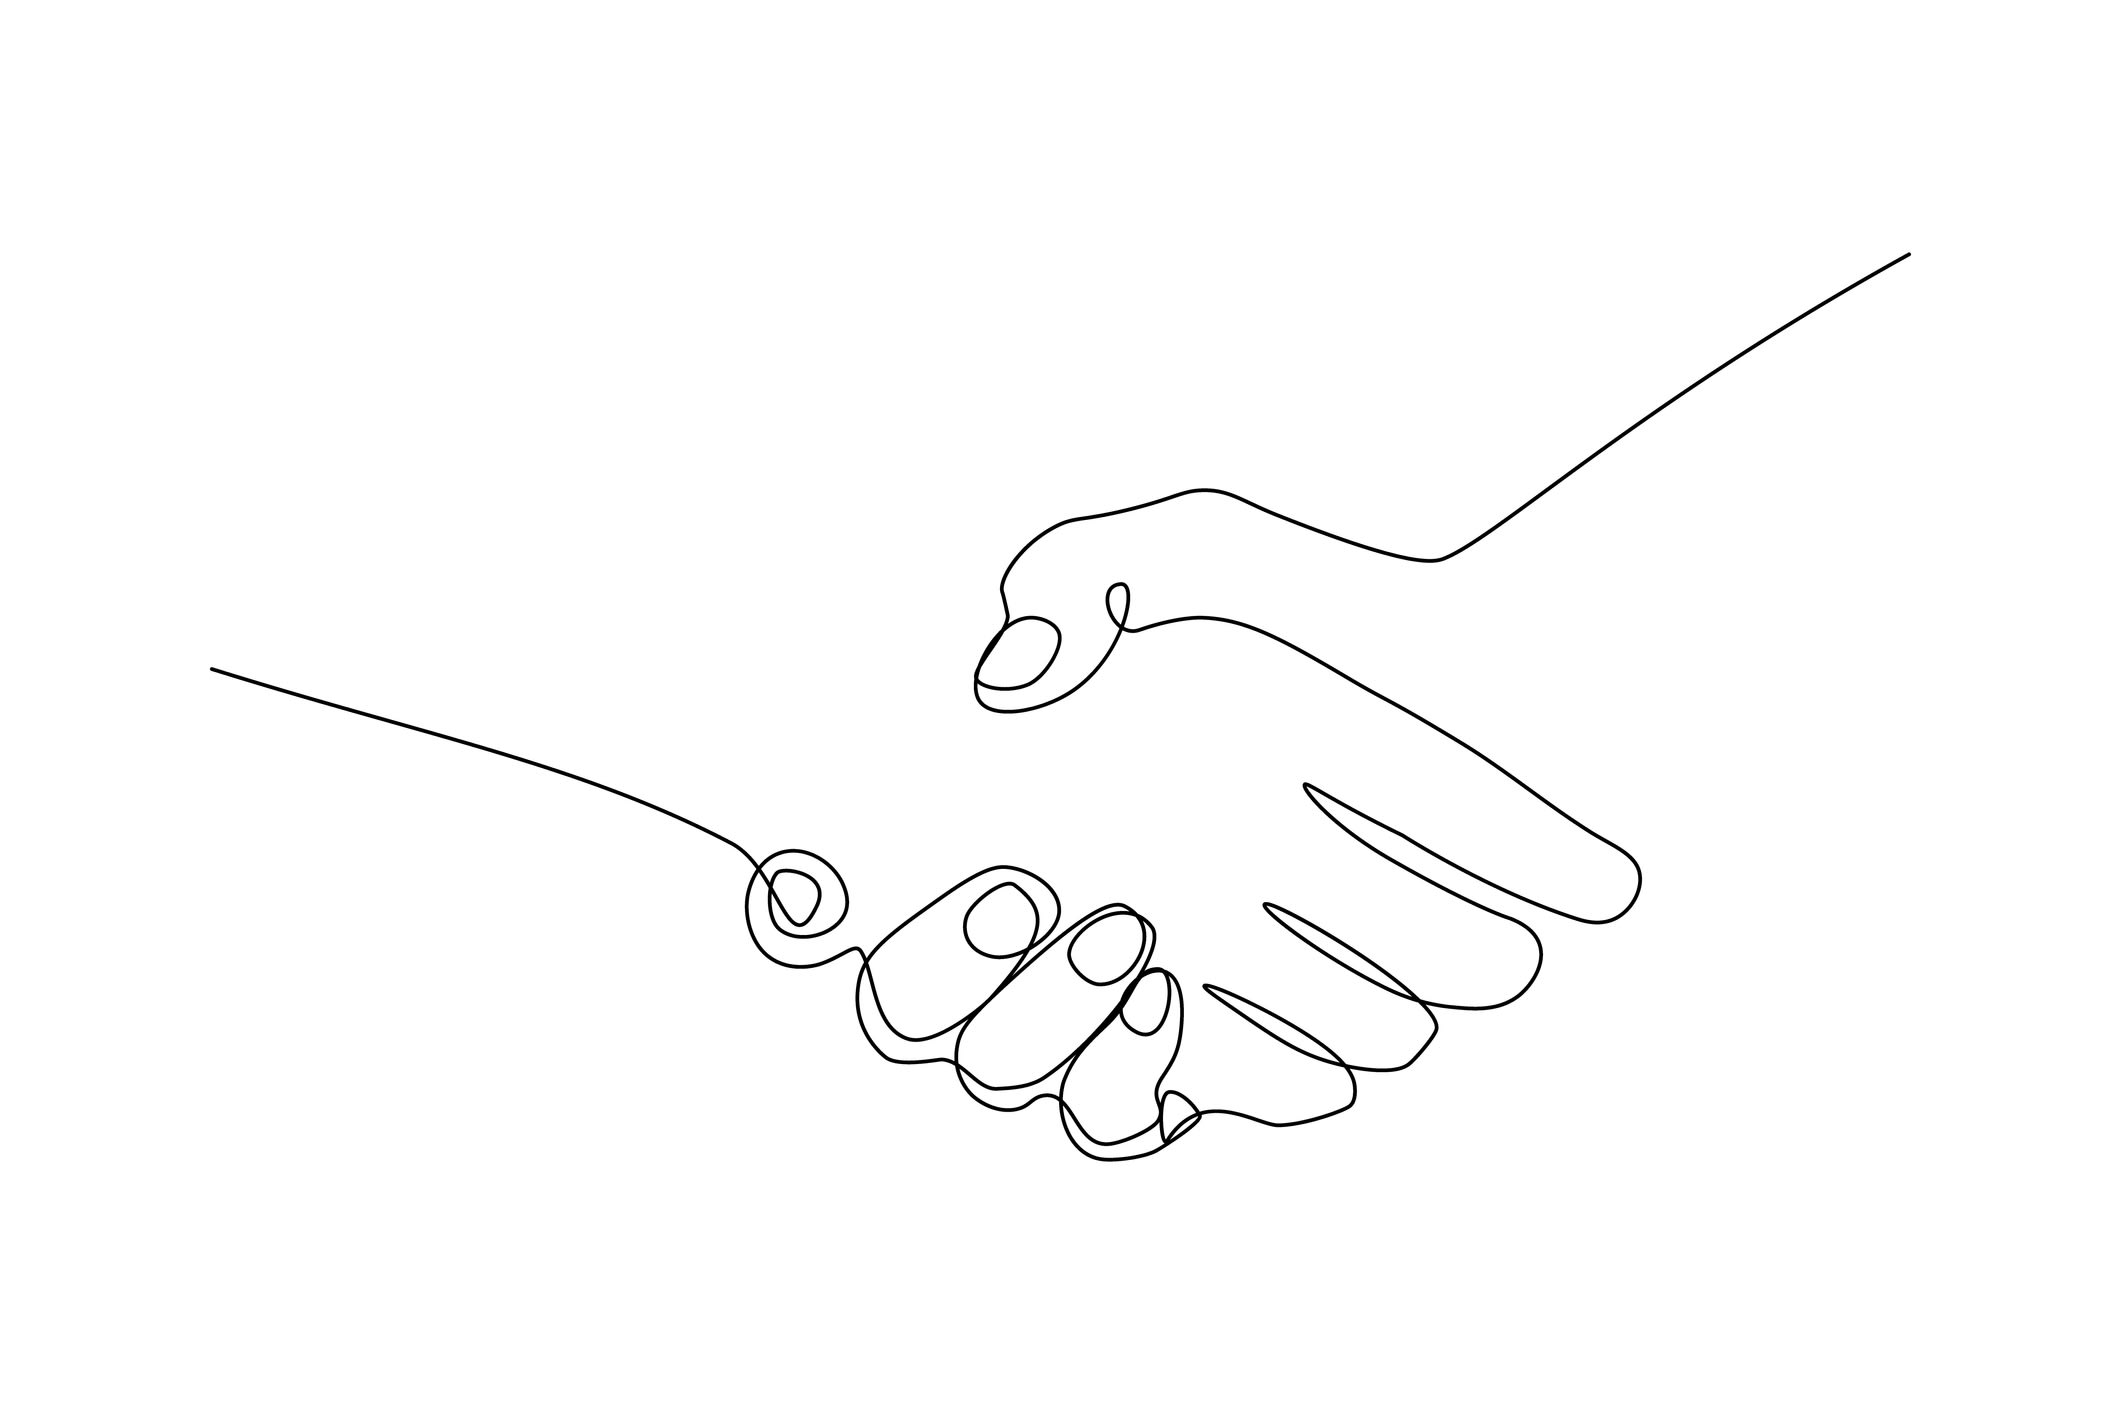 Handshake gesture